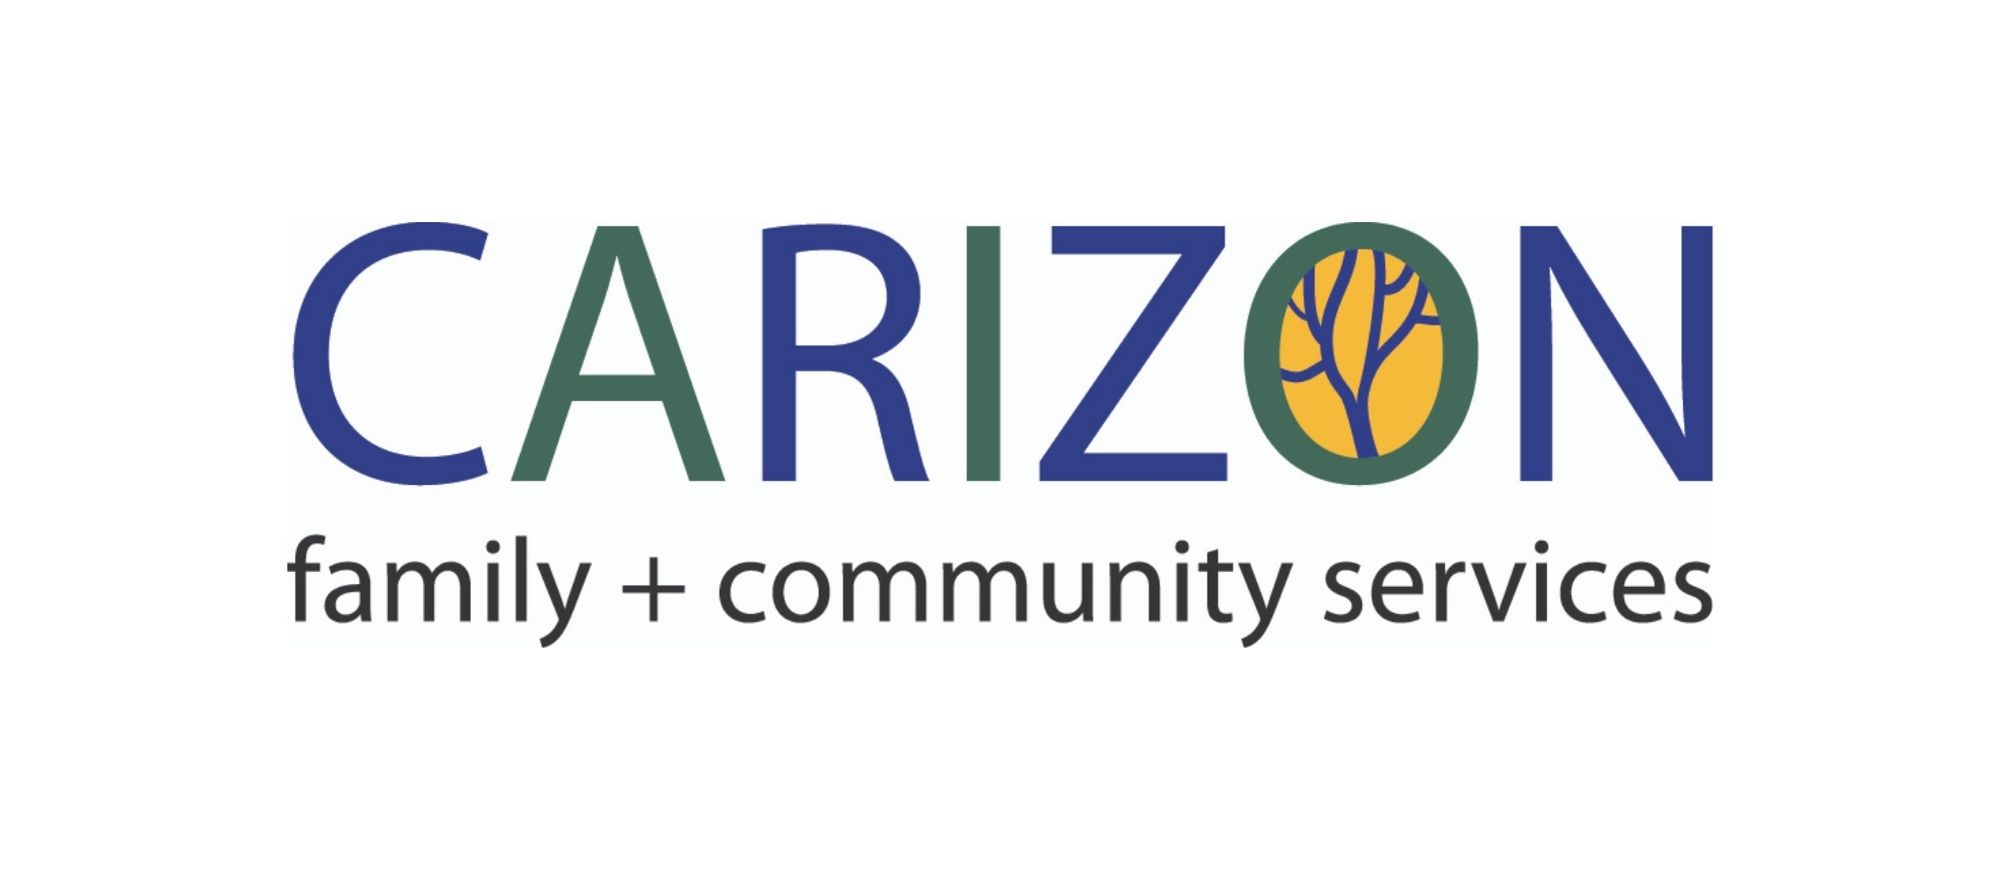 Carizon logo